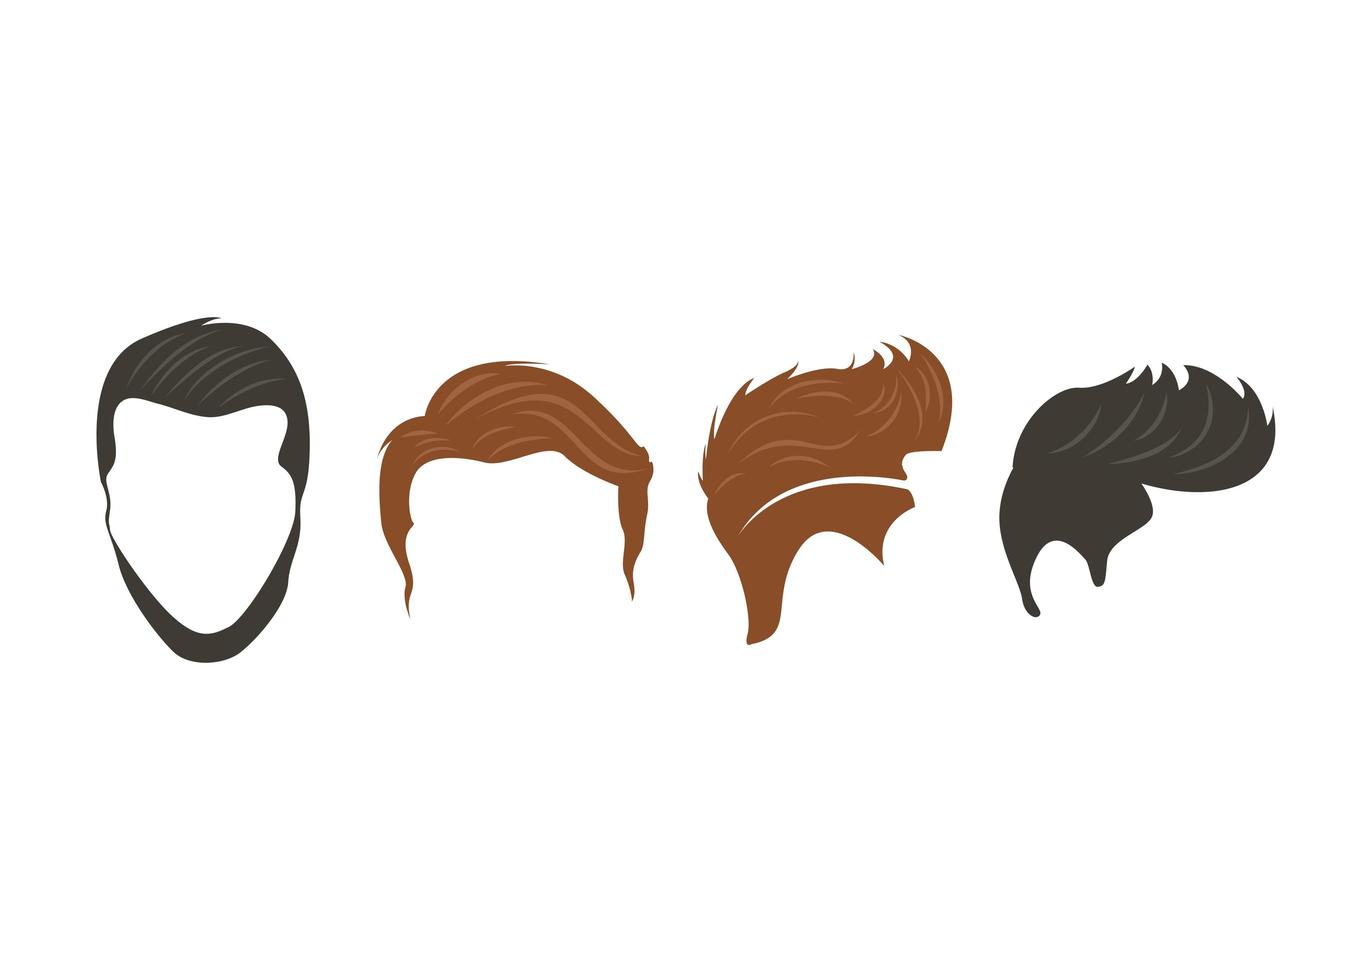 Hairstyle icon design set vector